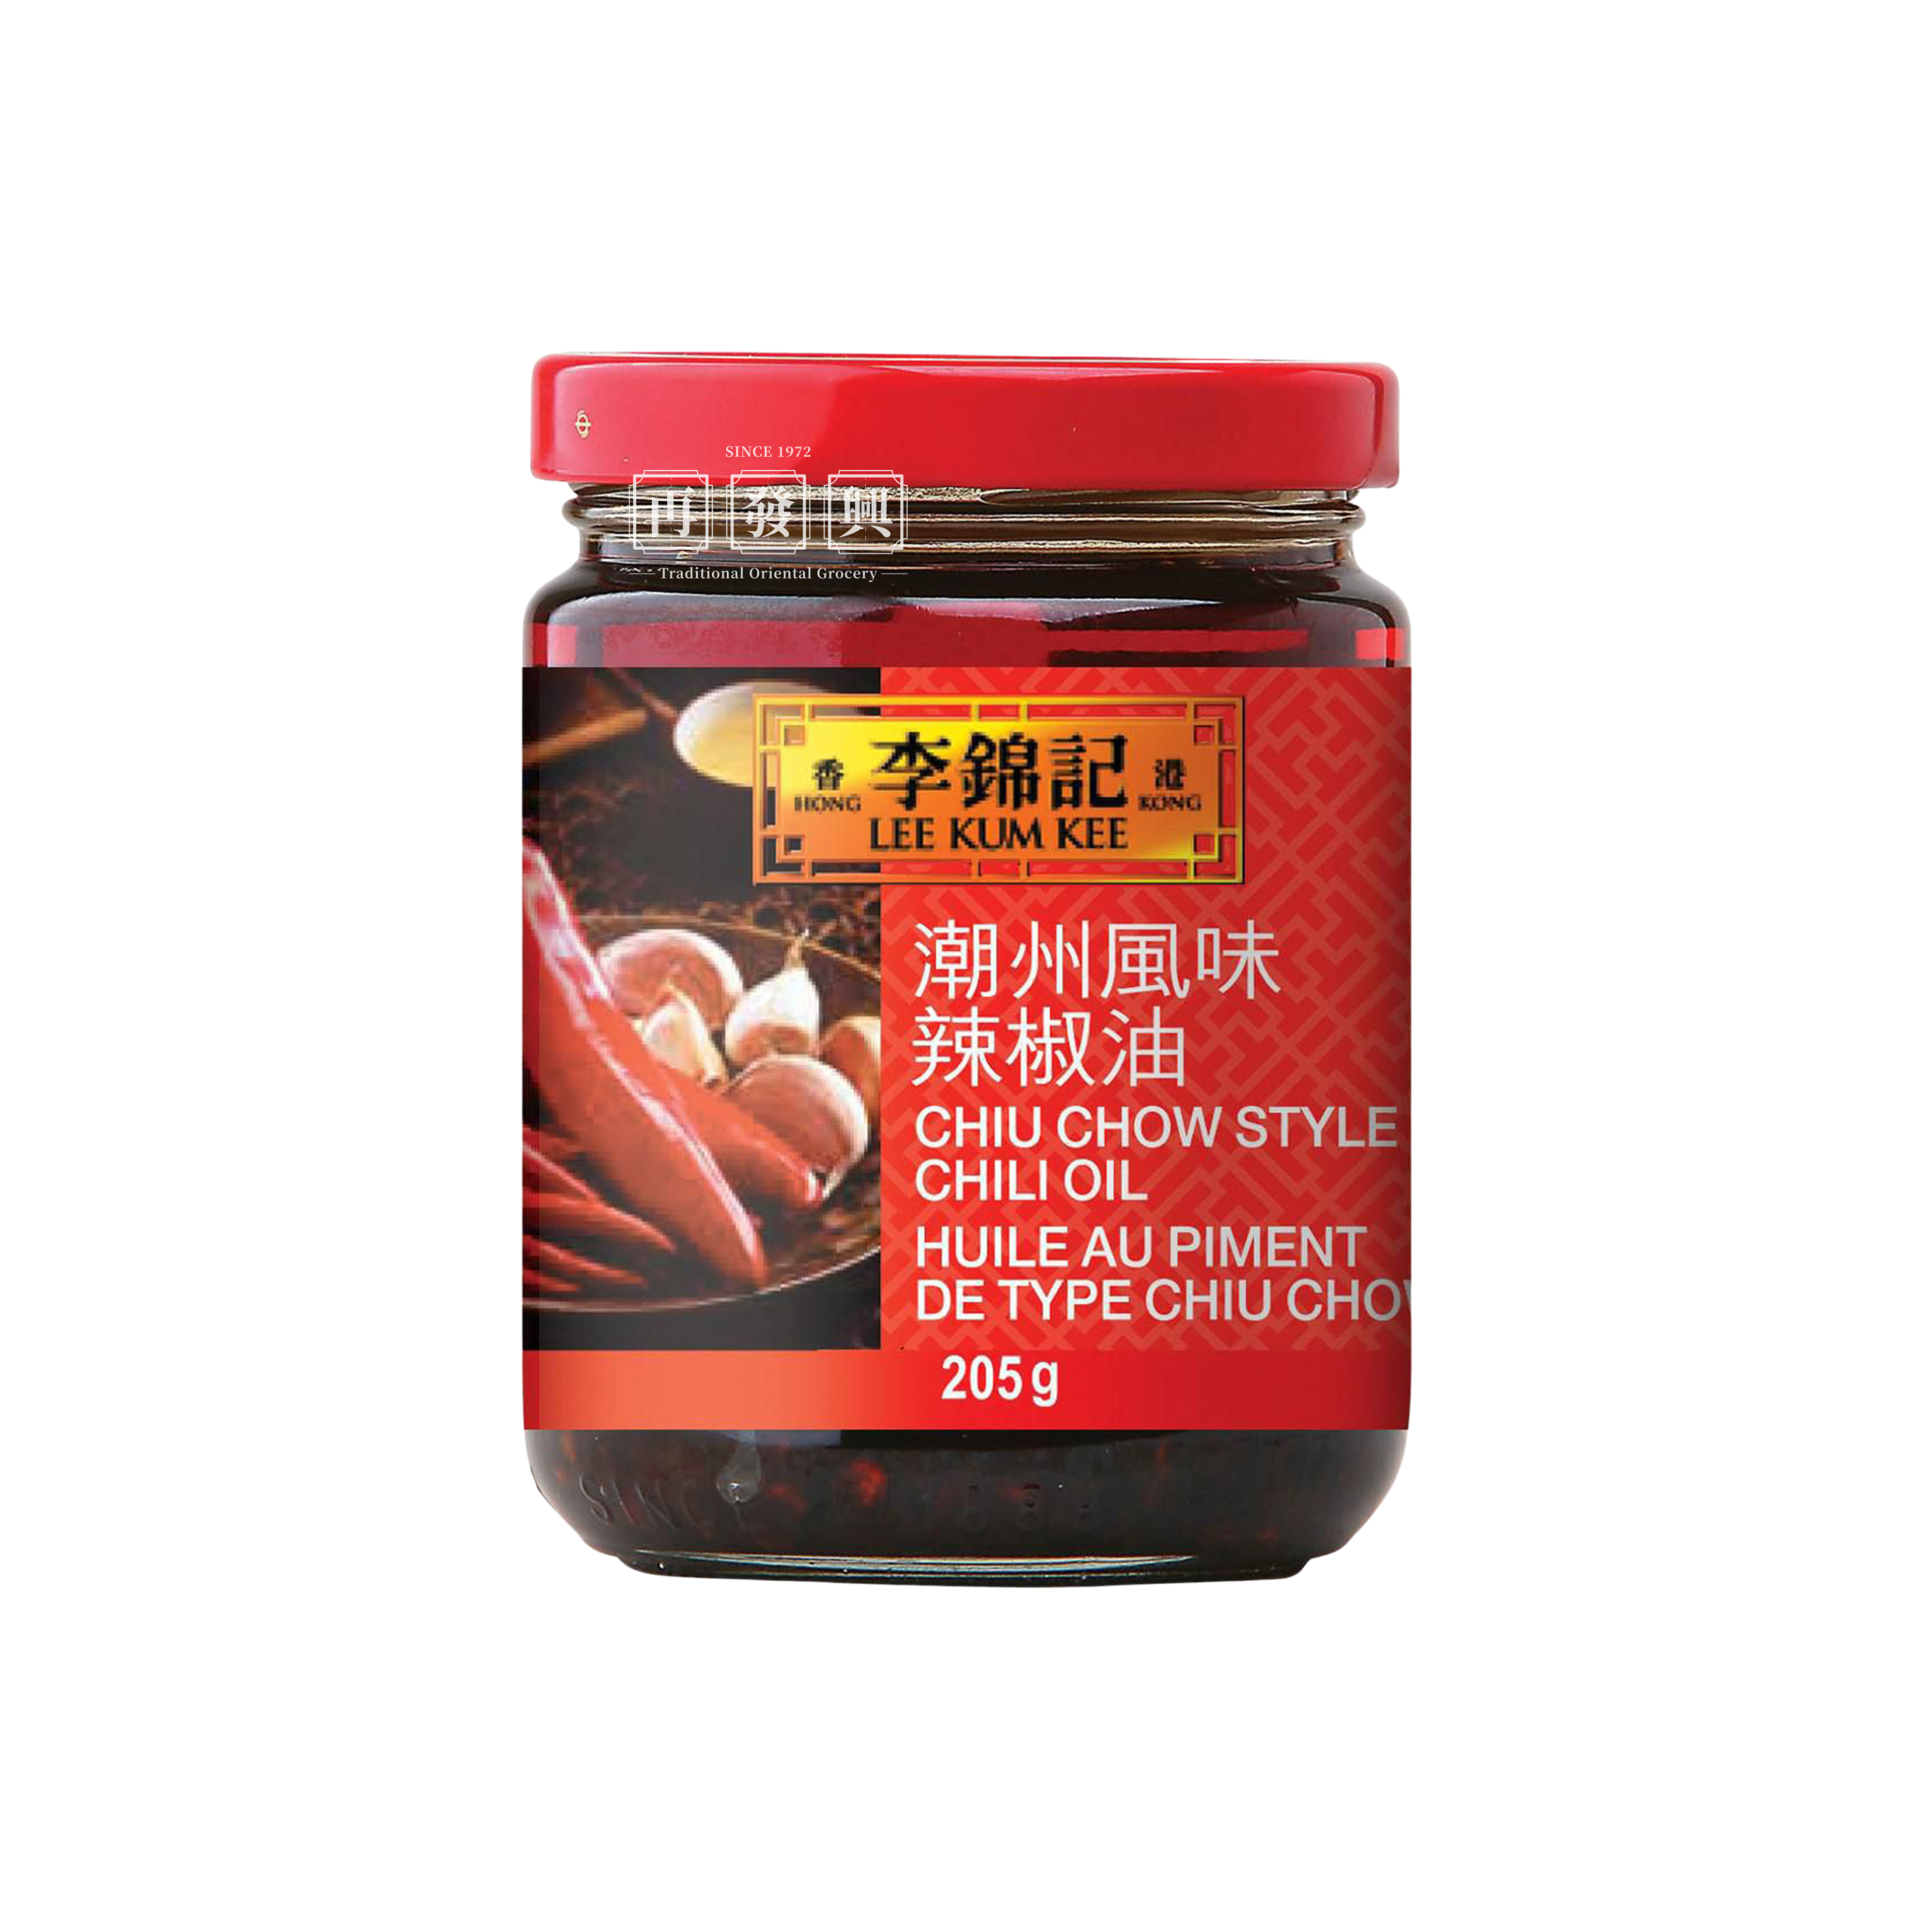 LKK Chiu Chow Chili Oil 205g